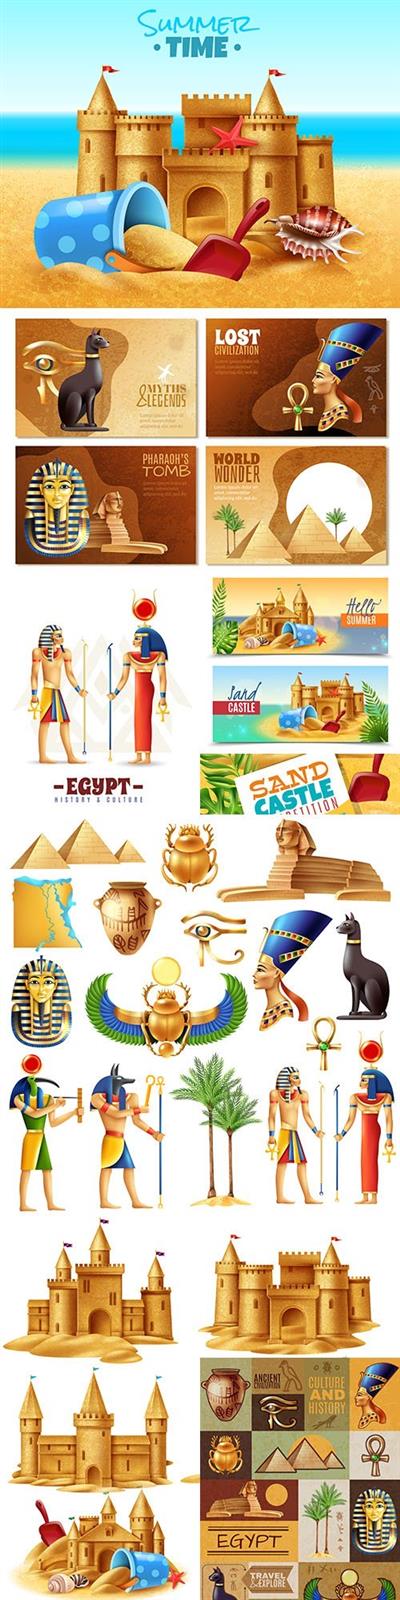 Castle sand and set Egypt symbols realistic illustrations